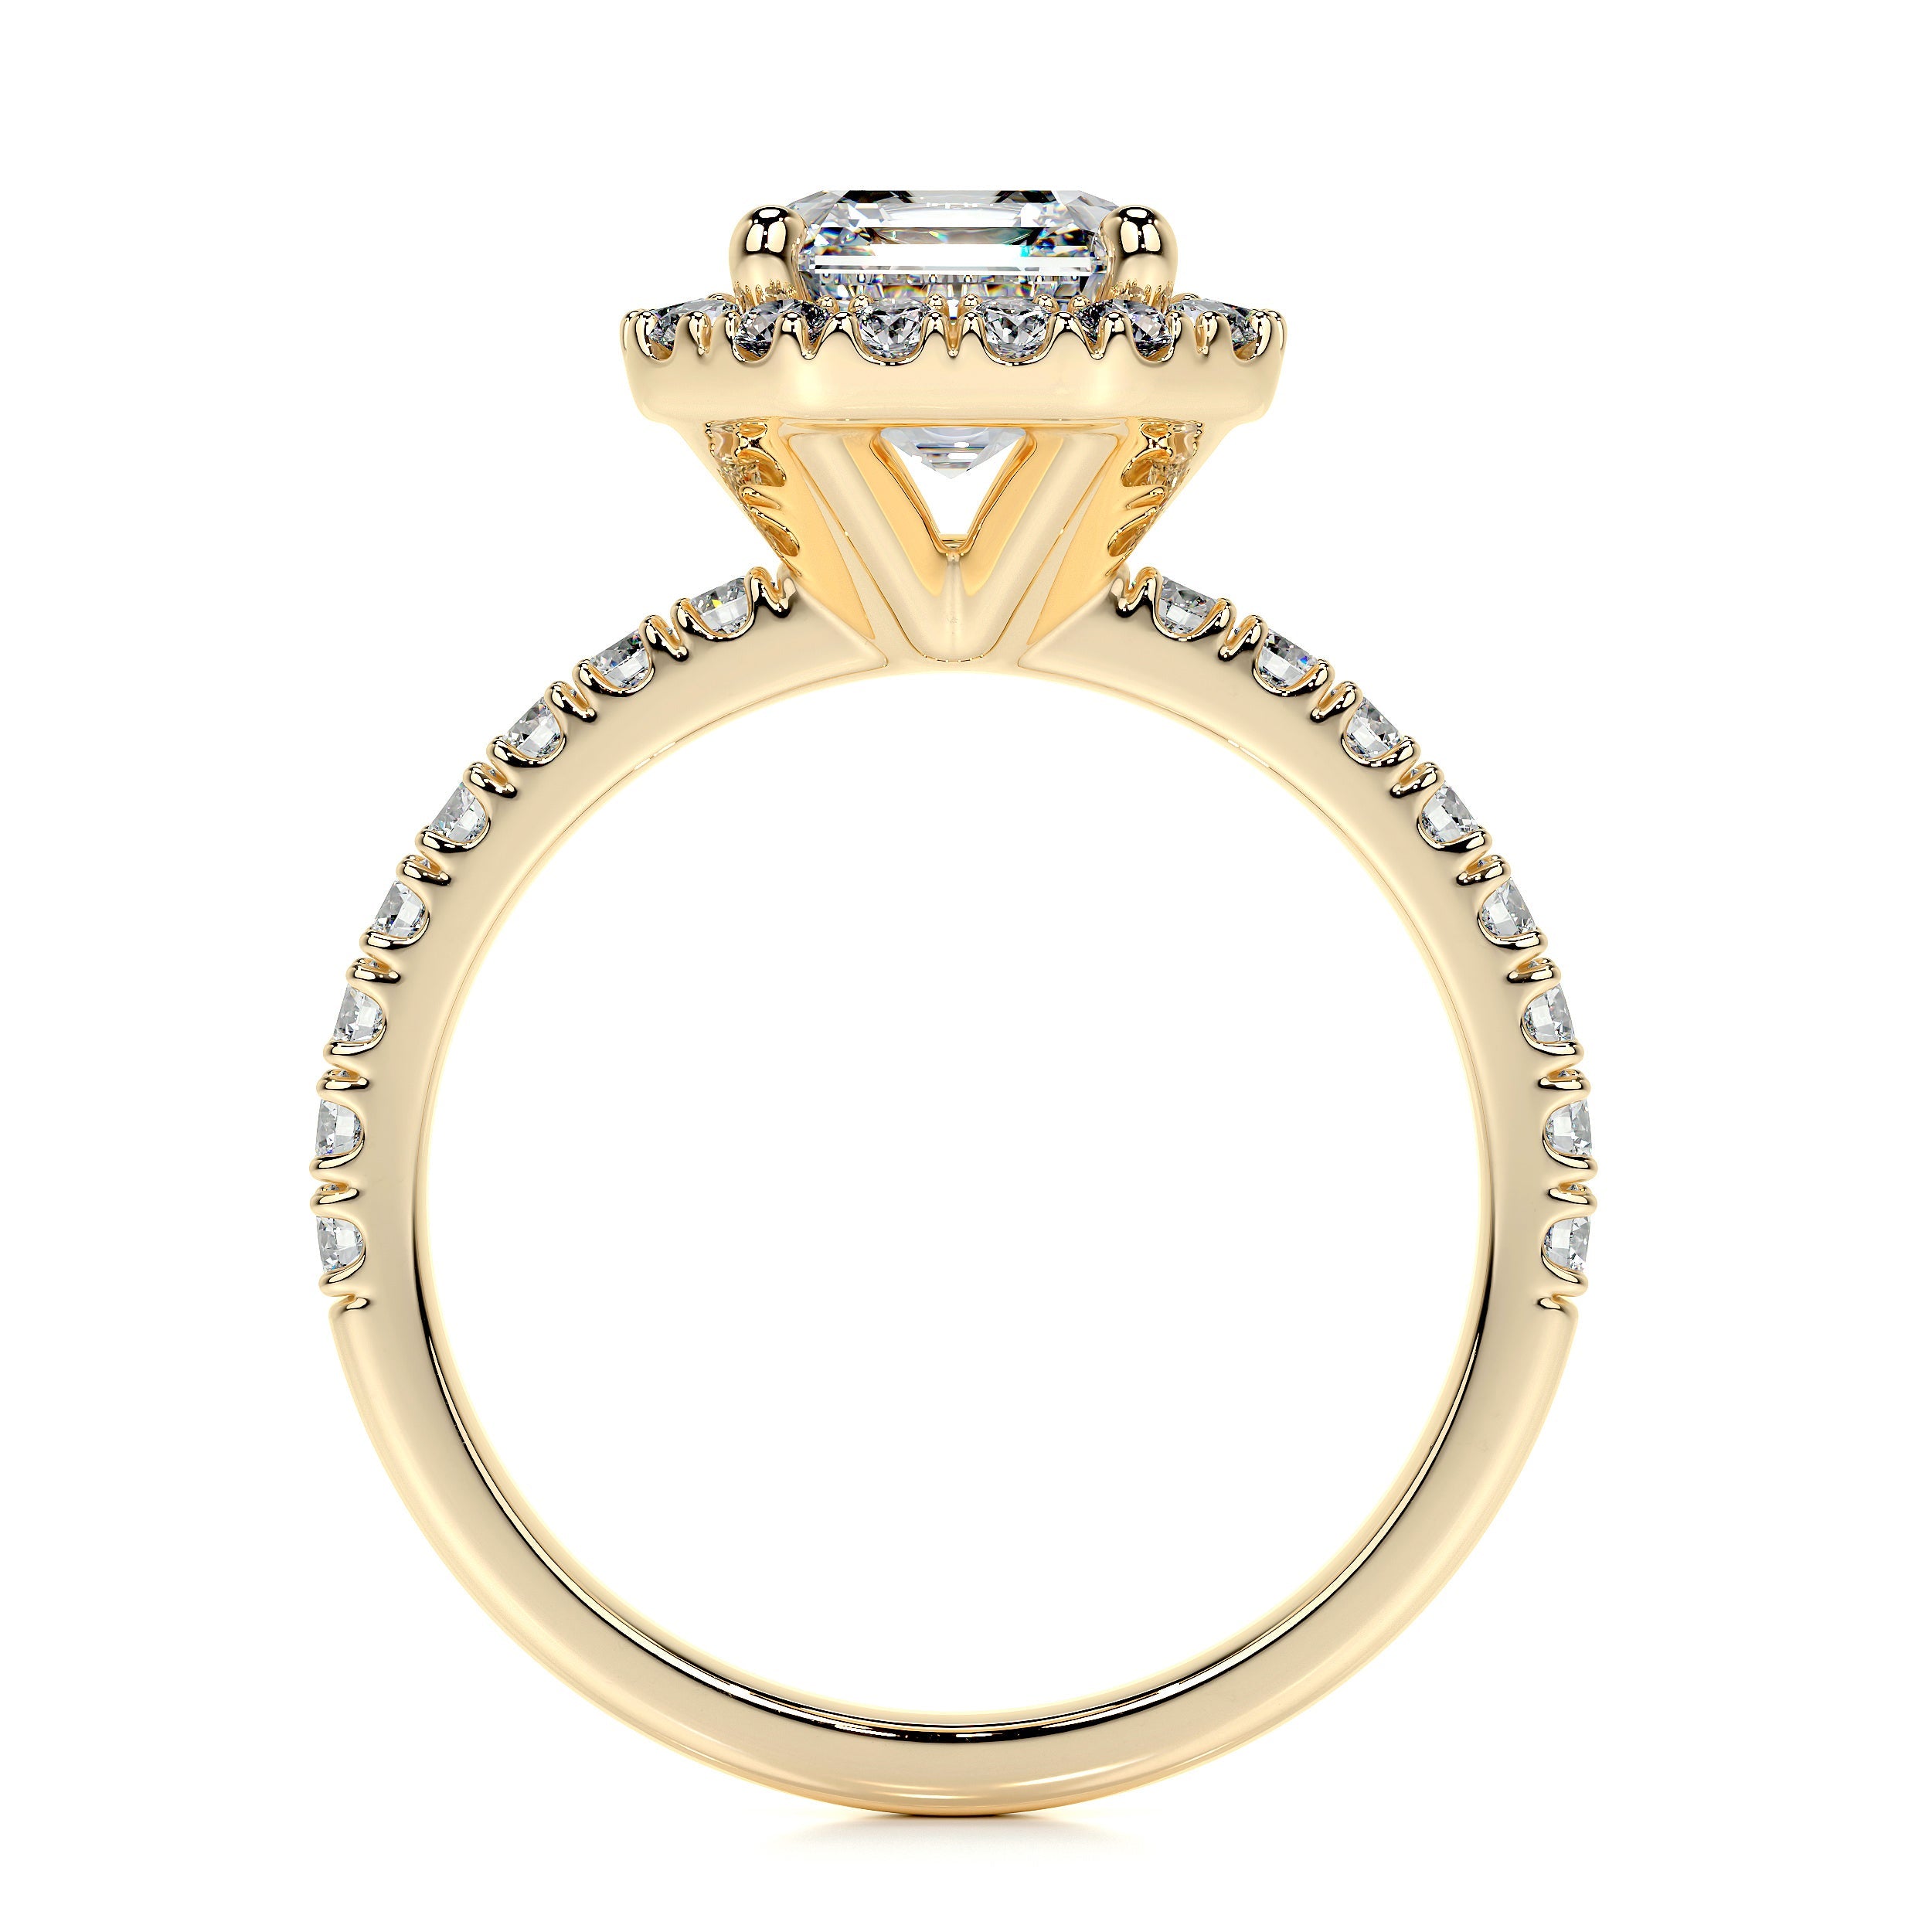 Brooklyn Lab Grown Diamond Ring   (2 Carat) -18K Yellow Gold